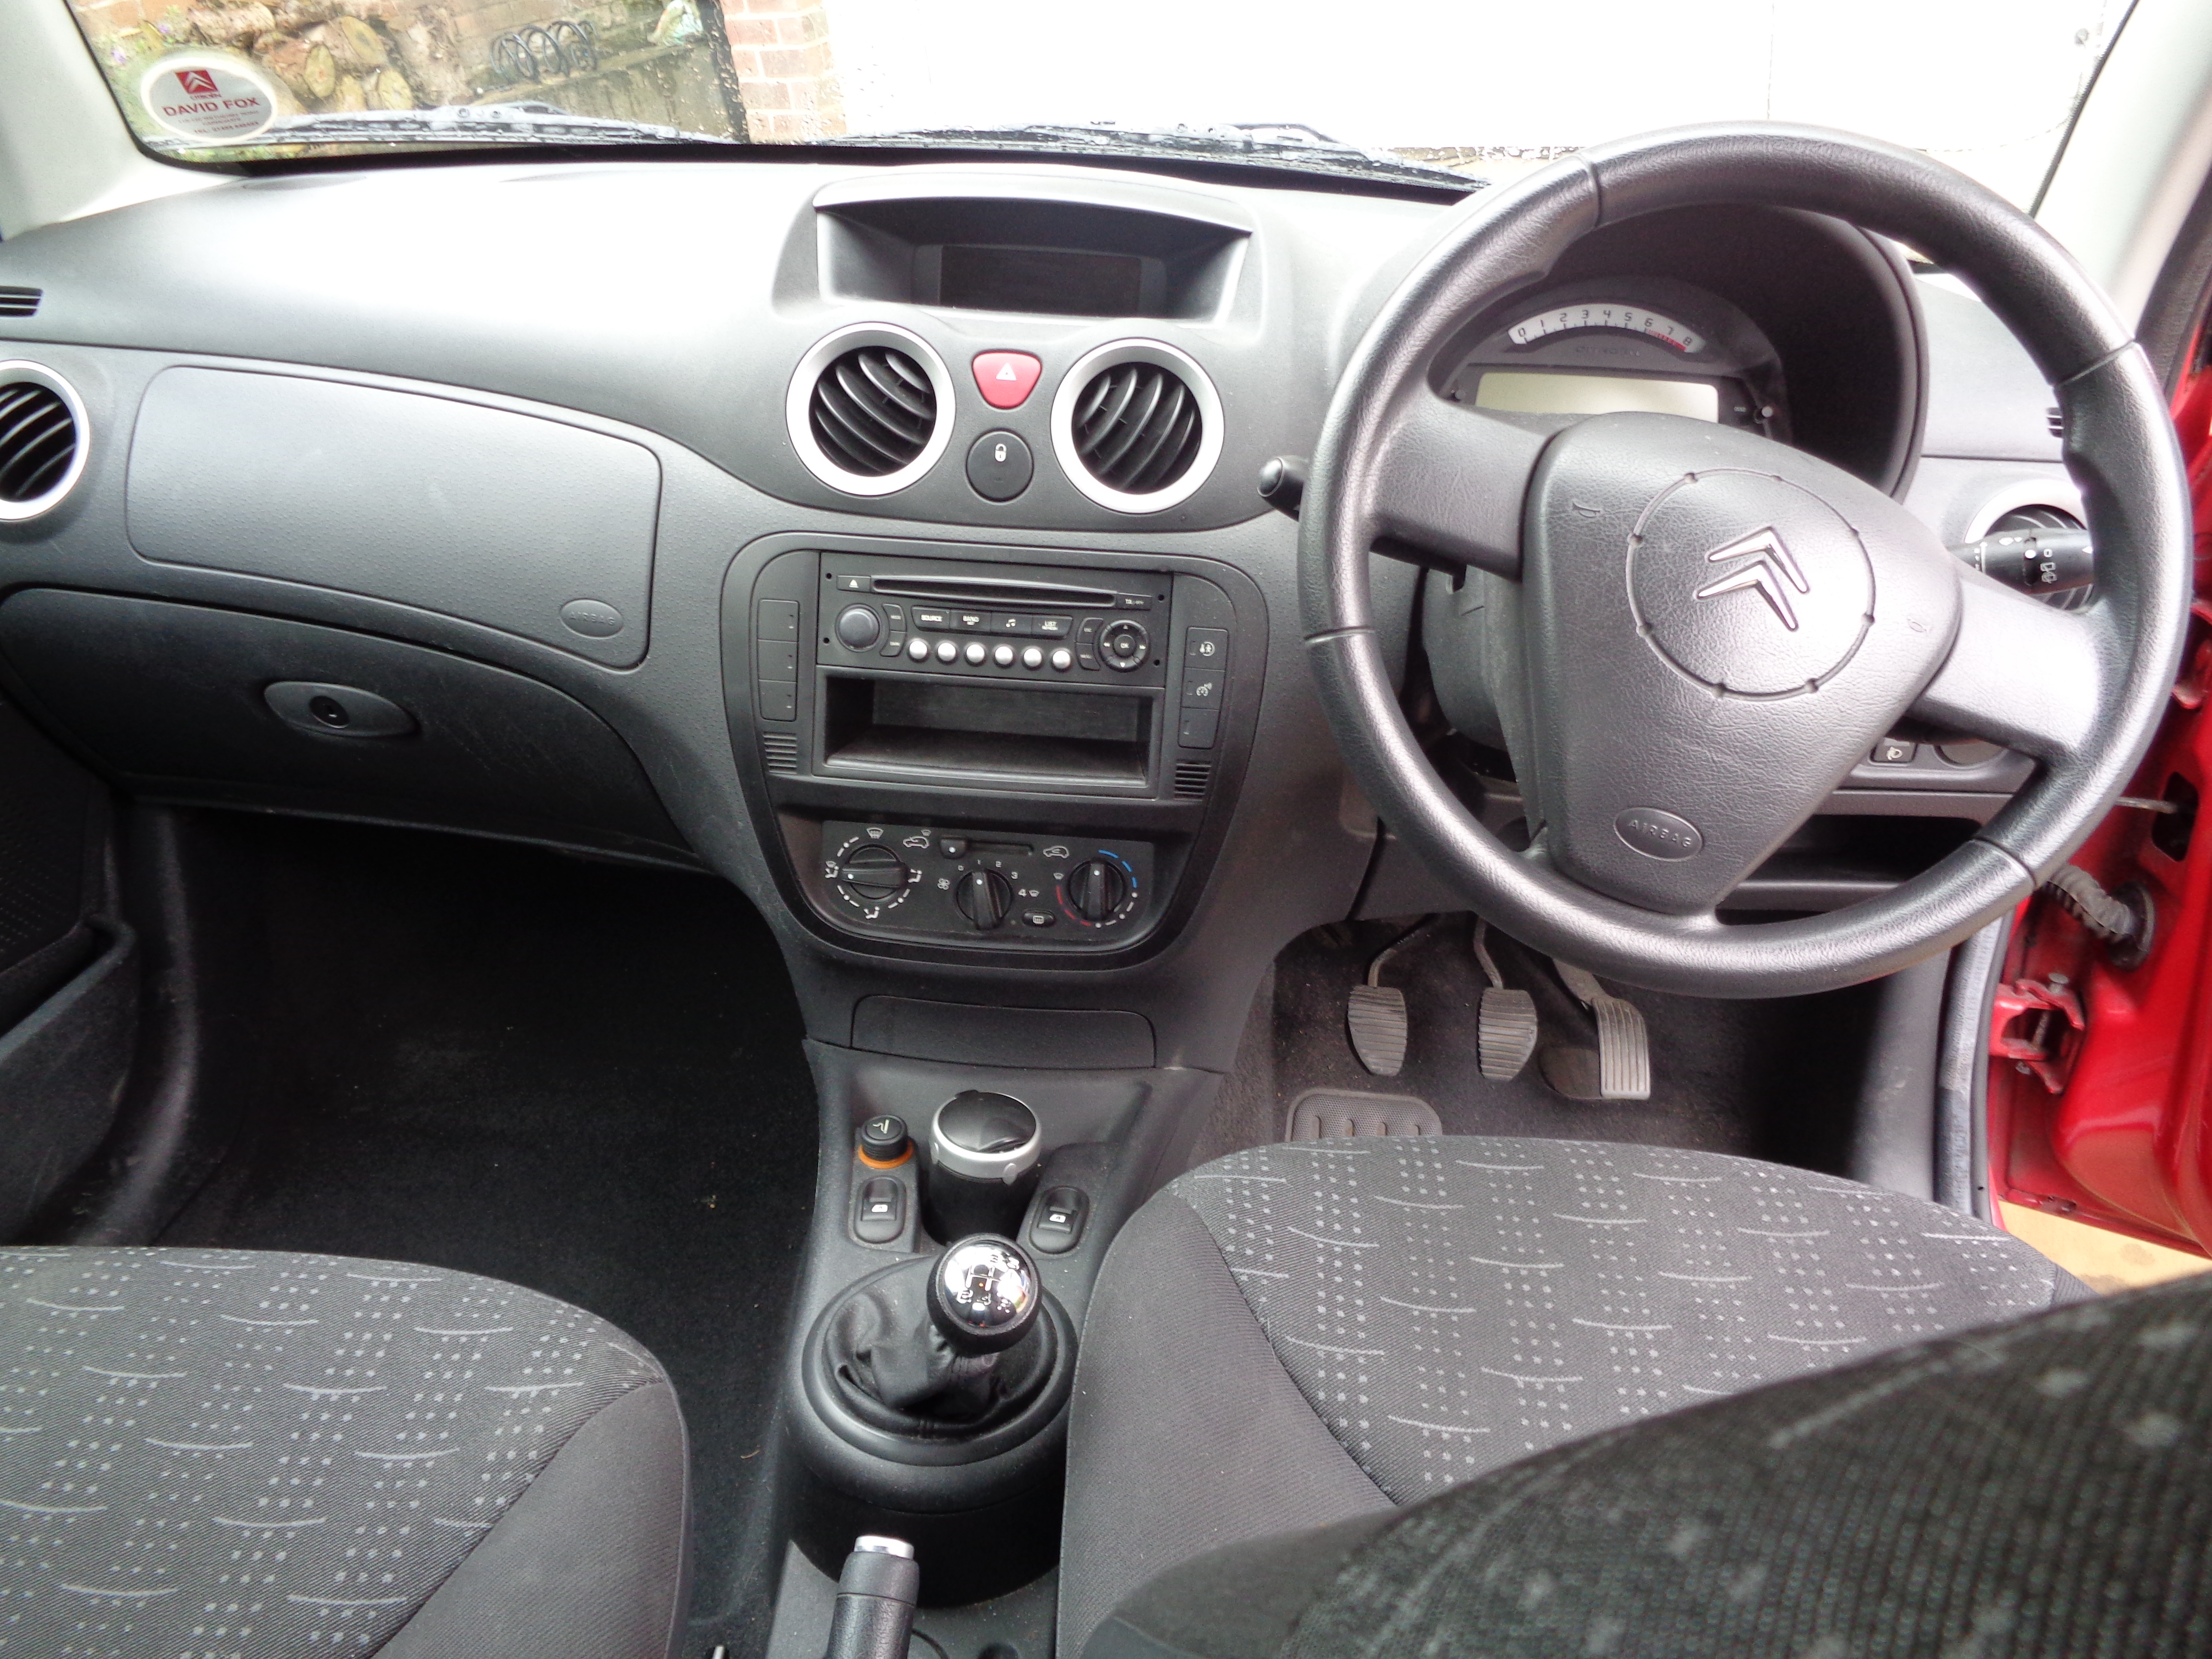 File:2005 Citroën C3 interior (8th July 2015) 002.JPG - Wikimedia Commons